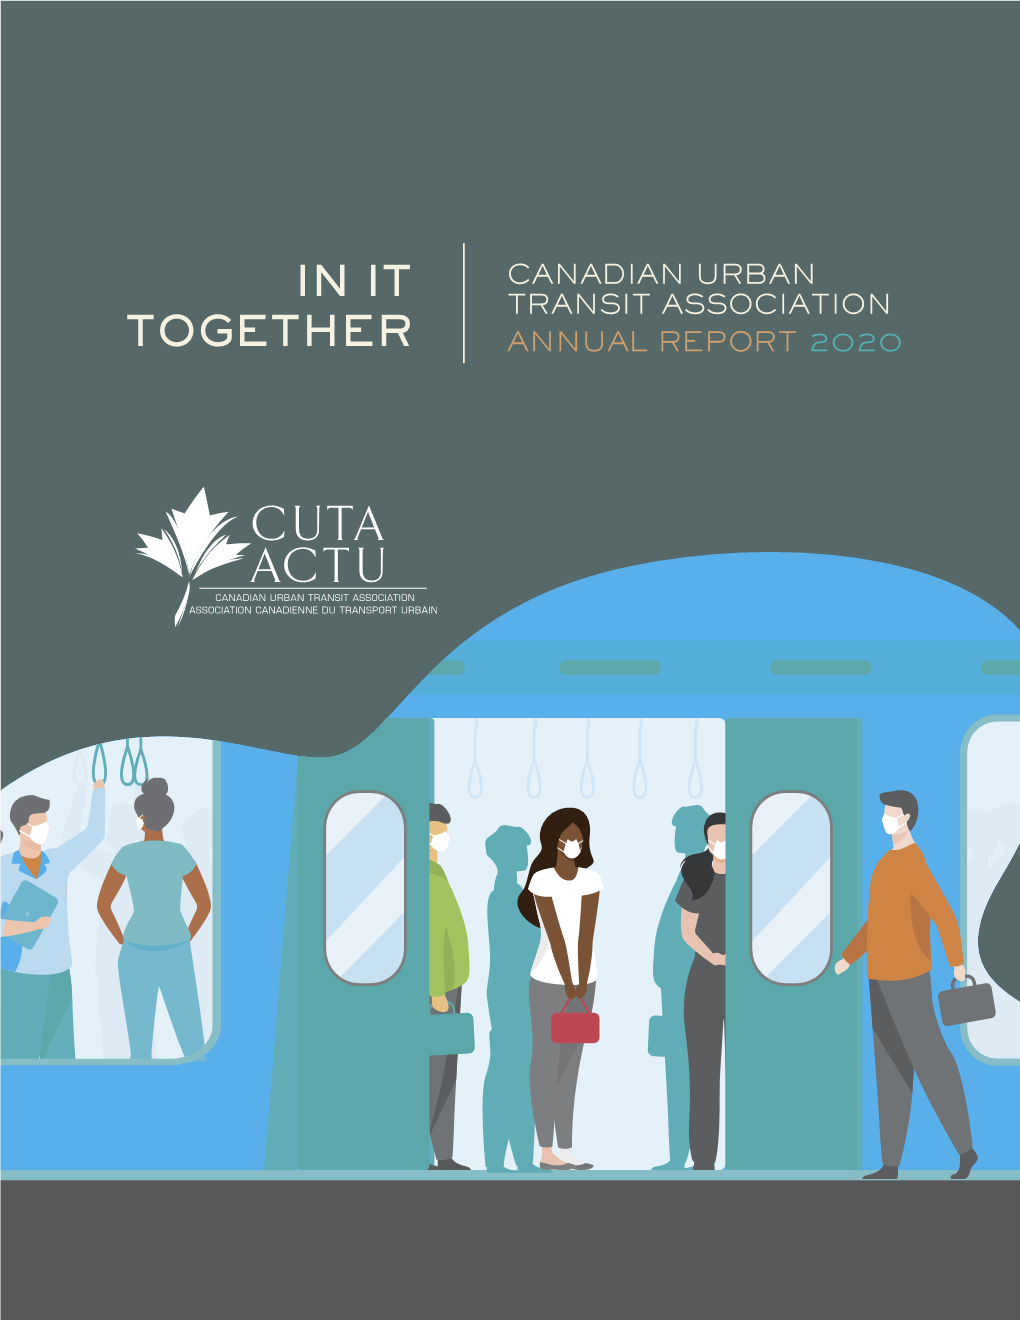 Read CUTA's 2020 Annual Report